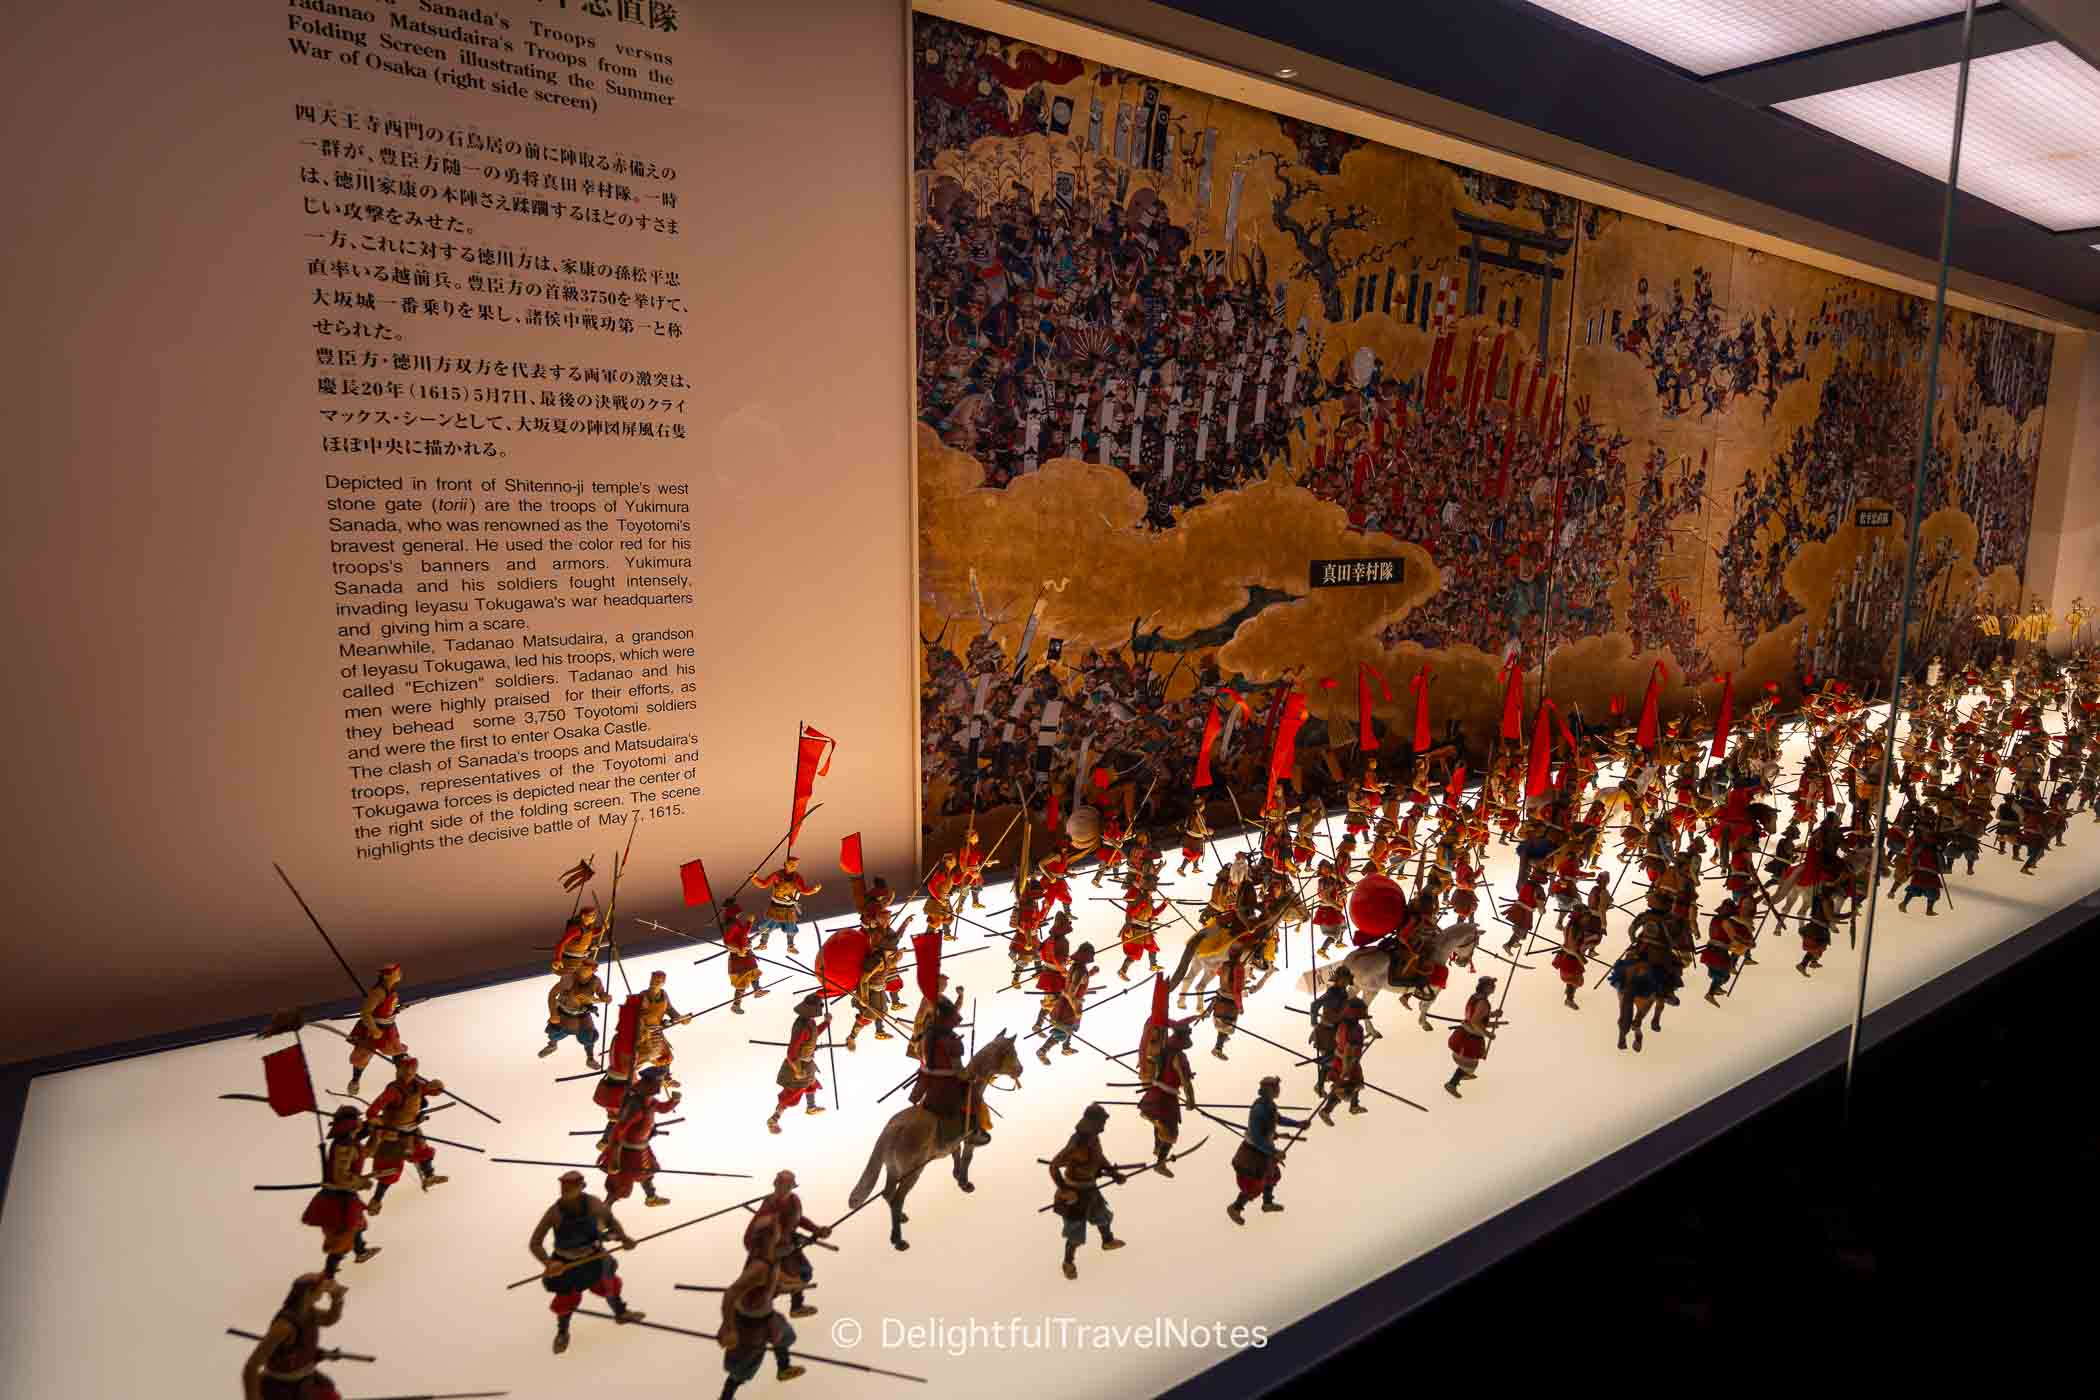 Scene of fighting soldiers in Osaka battle exhibit in the castle.